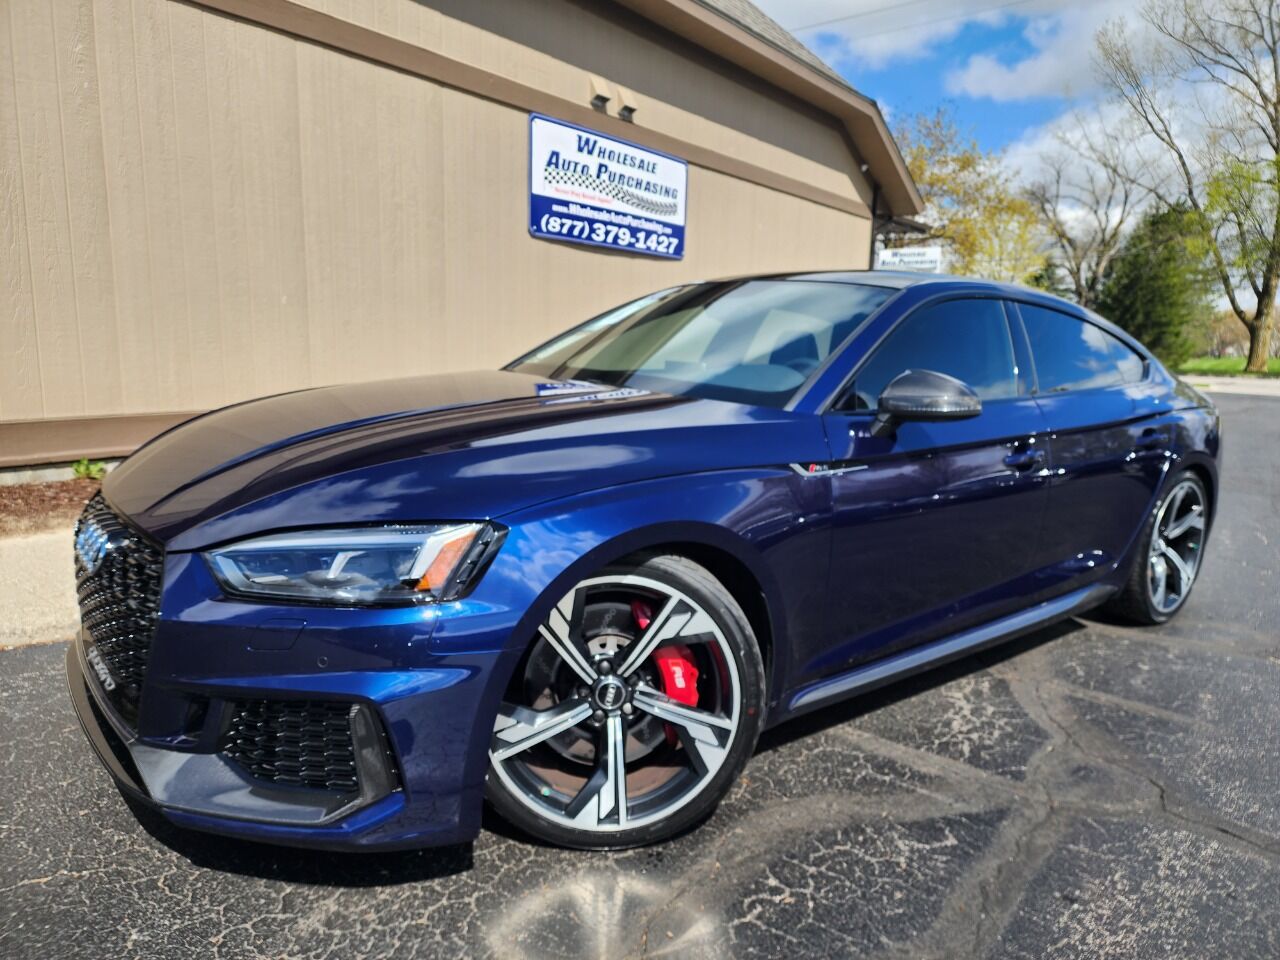 Audi RS 5 For Sale - Carsforsale.com®